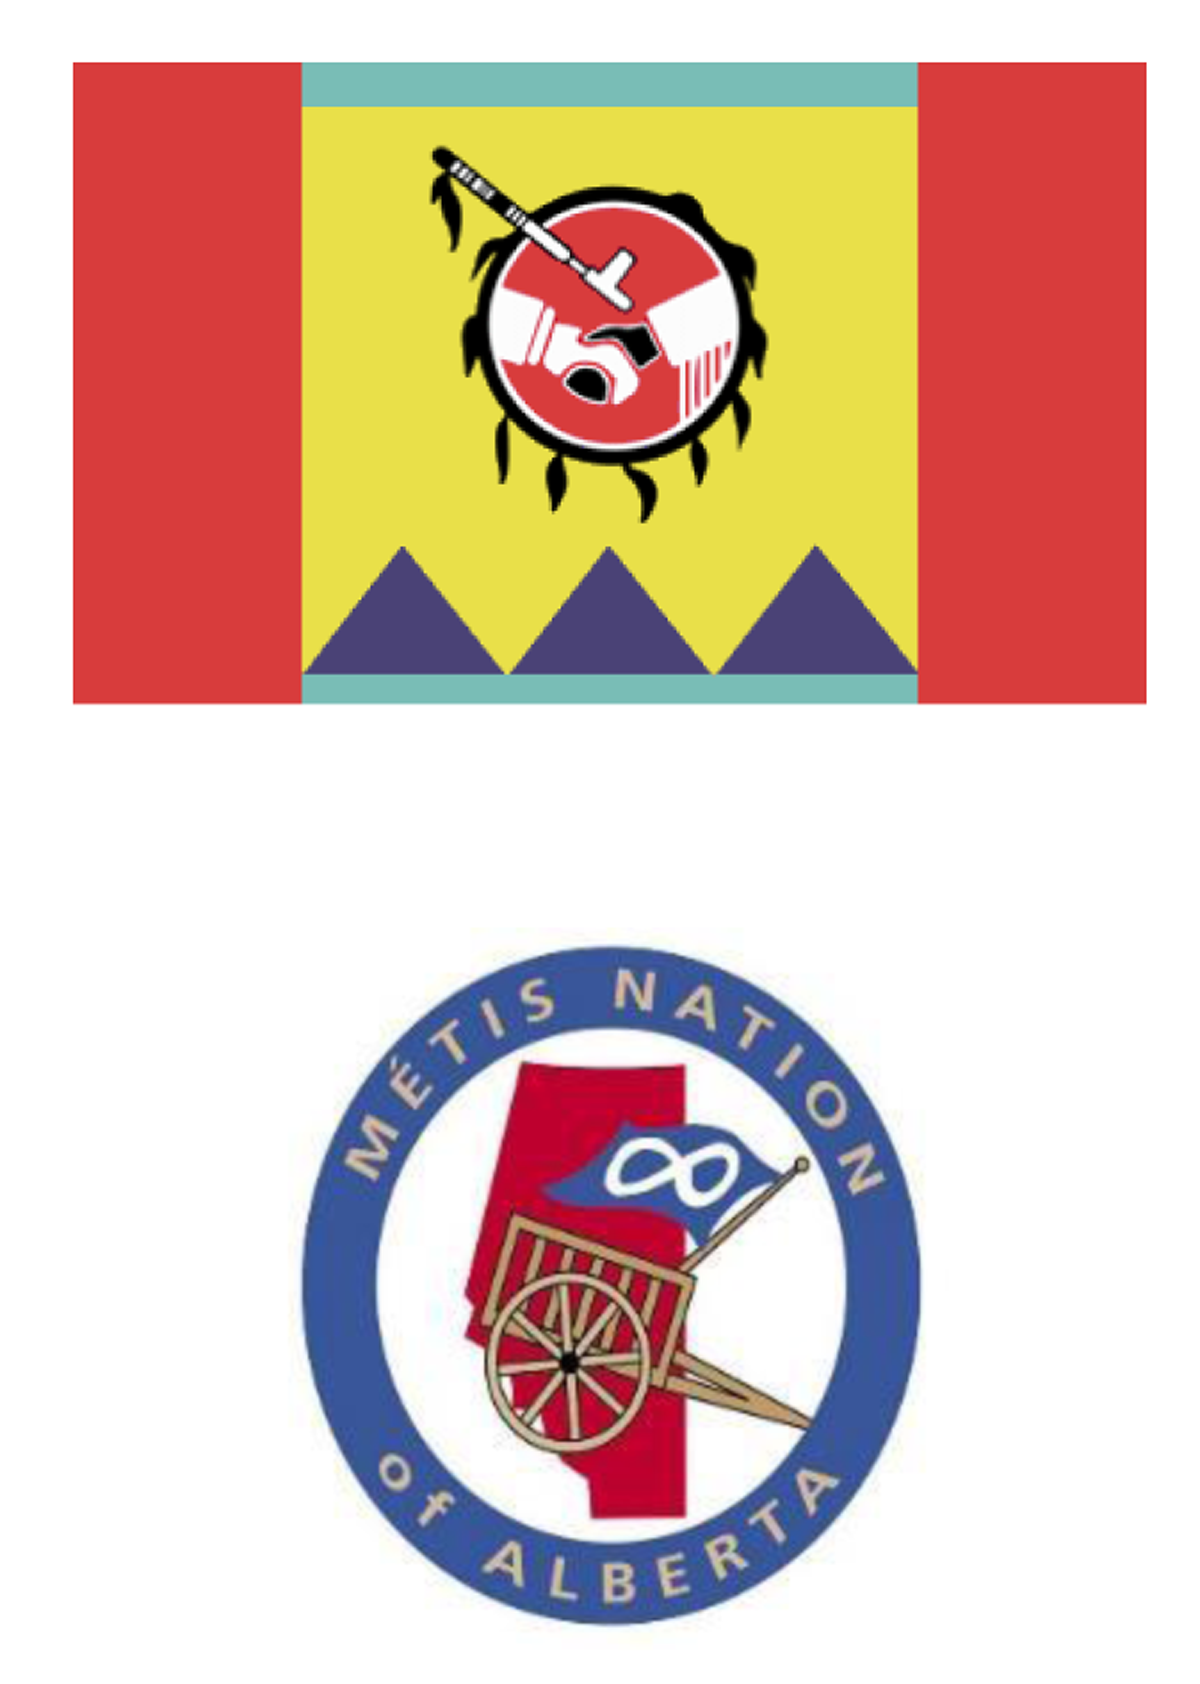 En haut – Symbole du stoney nakoda; En bas – Symbole de la nation métisse de l’Alberta

